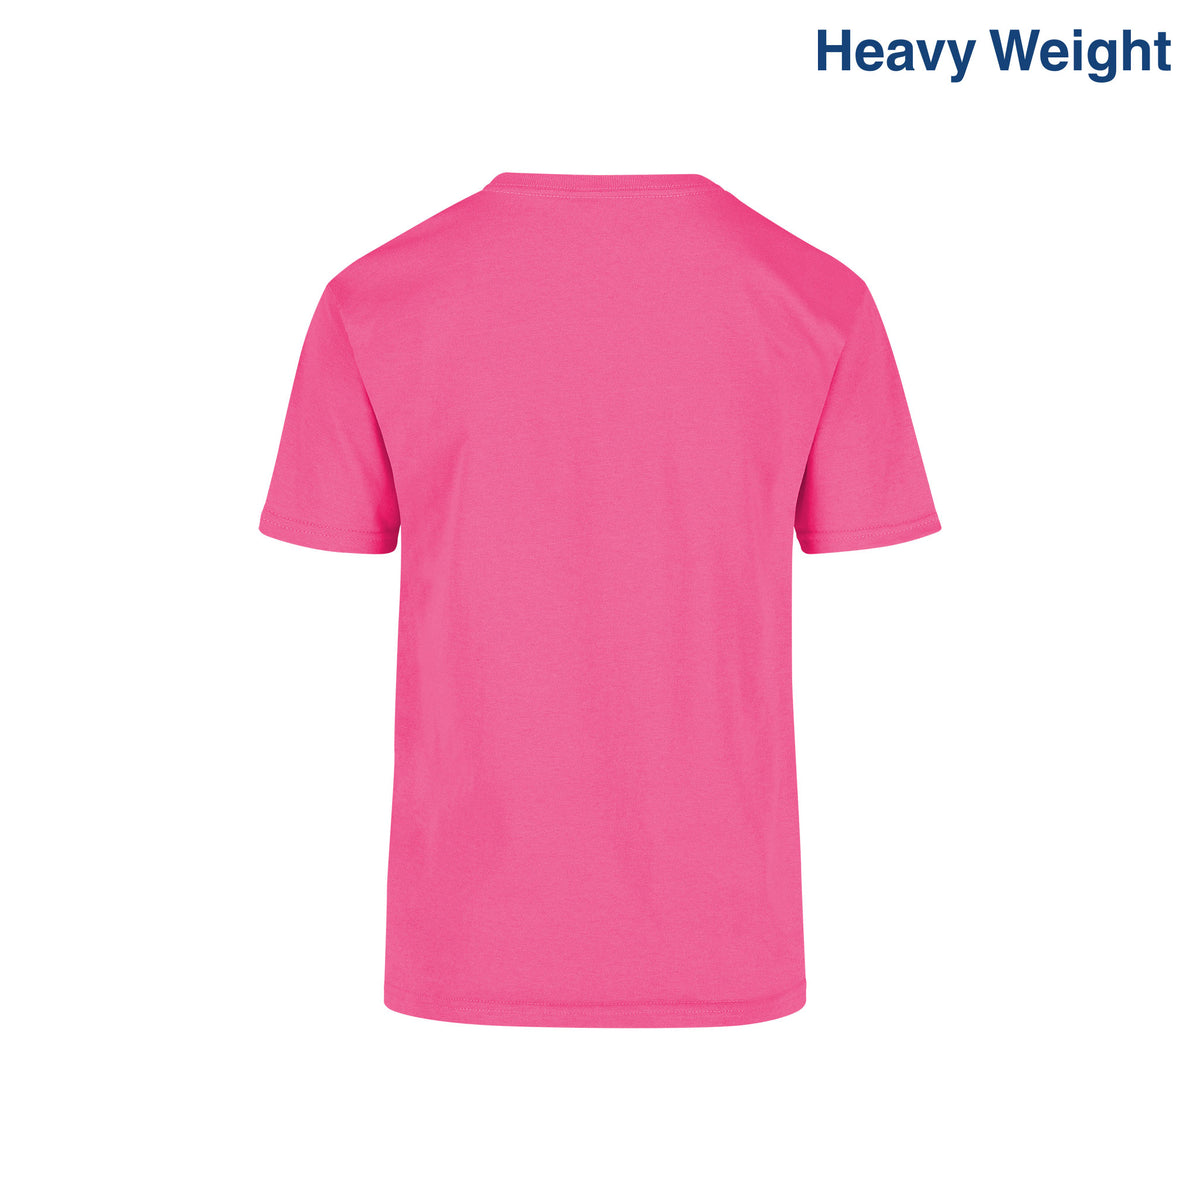 Youth's Heavy Weight Crew Neck Short Sleeve T-Shirt (Fuchsia